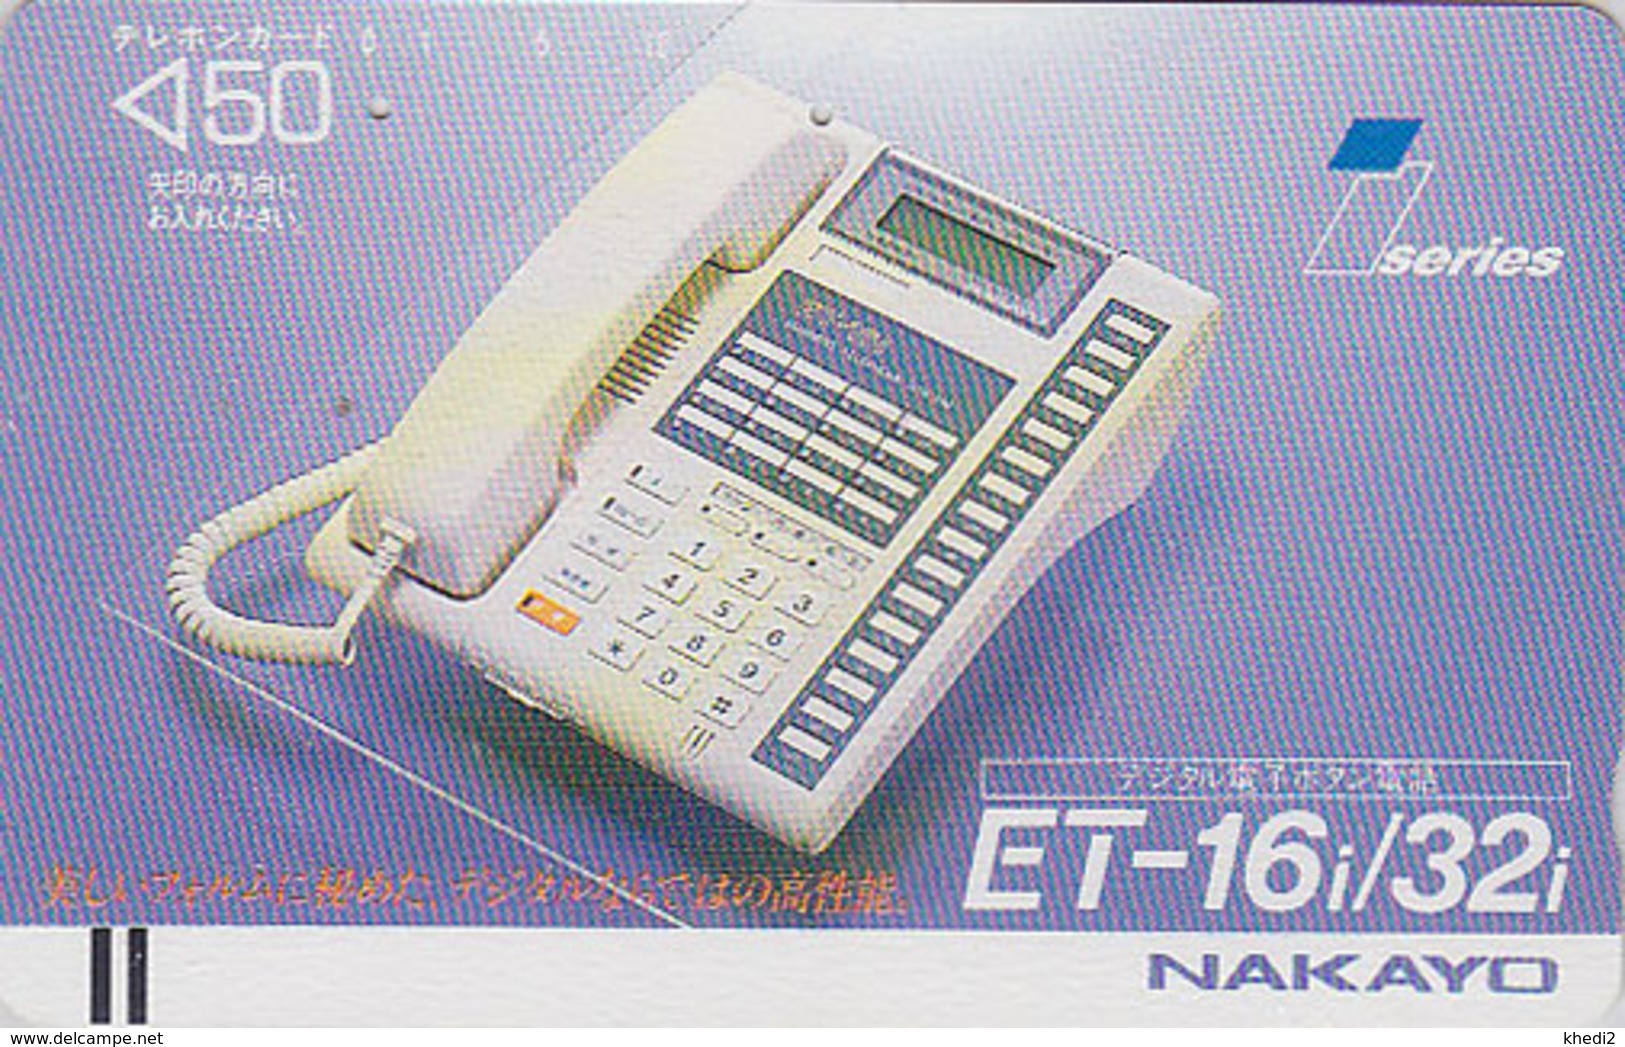 Télécarte Ancienne Japon / 110-7087 - TELEPHONE - Japan Front Bar Phonecard / A - TELEFON Balken TK - Téléphones